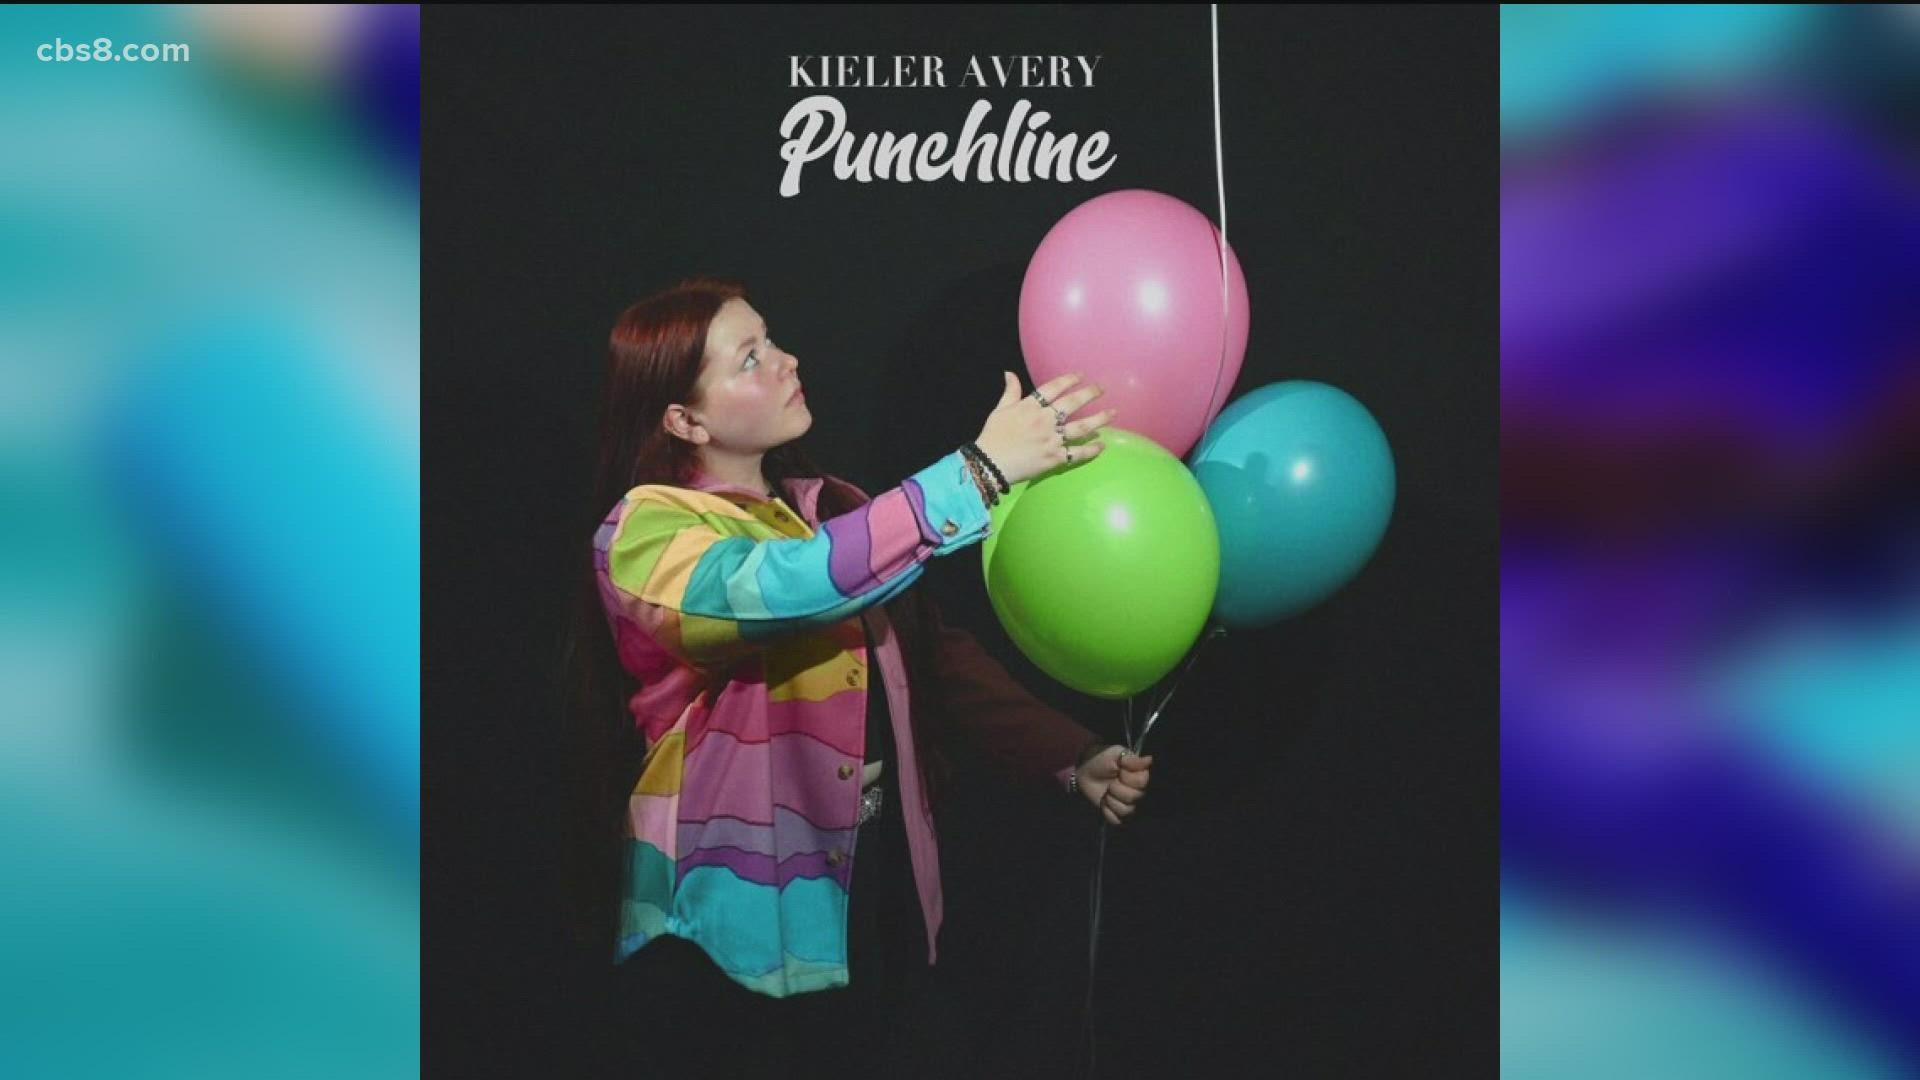 17-year-old Kieler Avery's album "Punchline" is no joke.